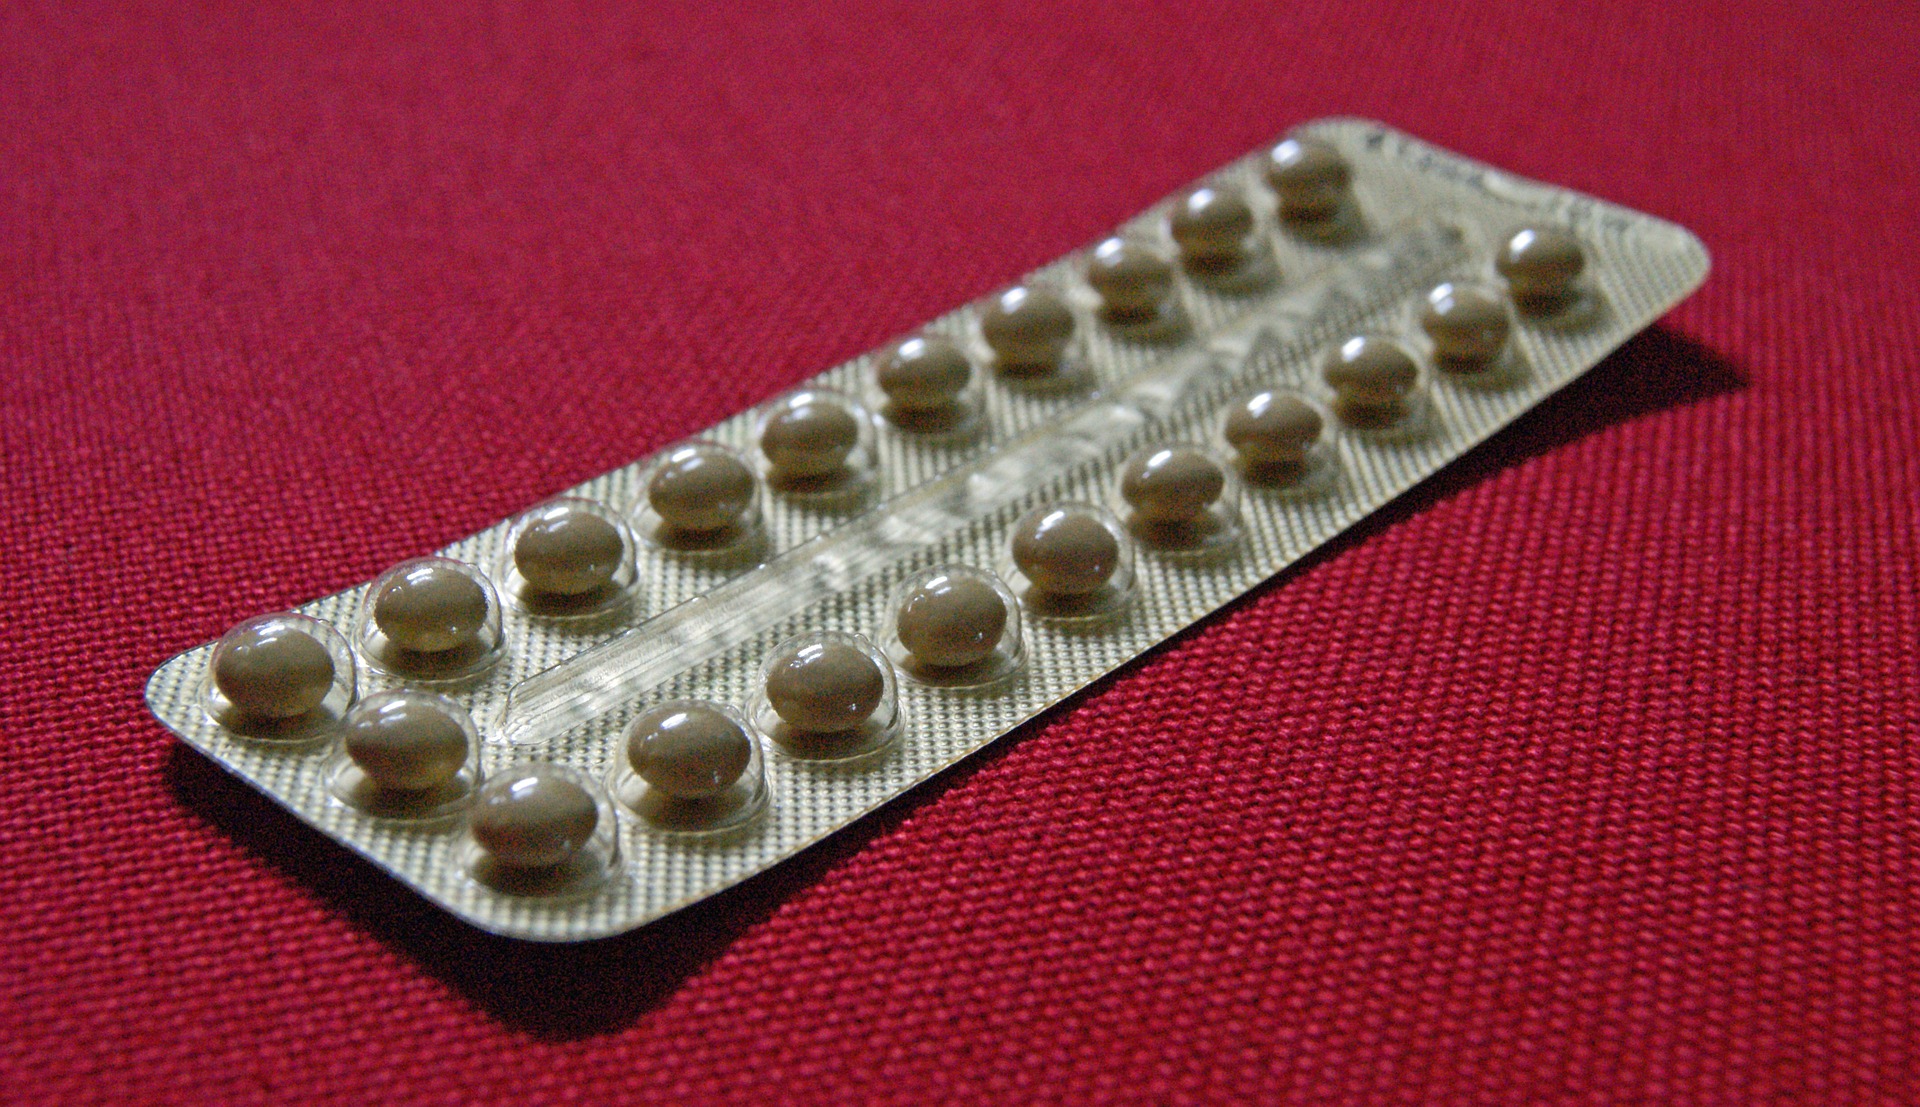 contraceptive-pills-g9a0aa91f7_1920